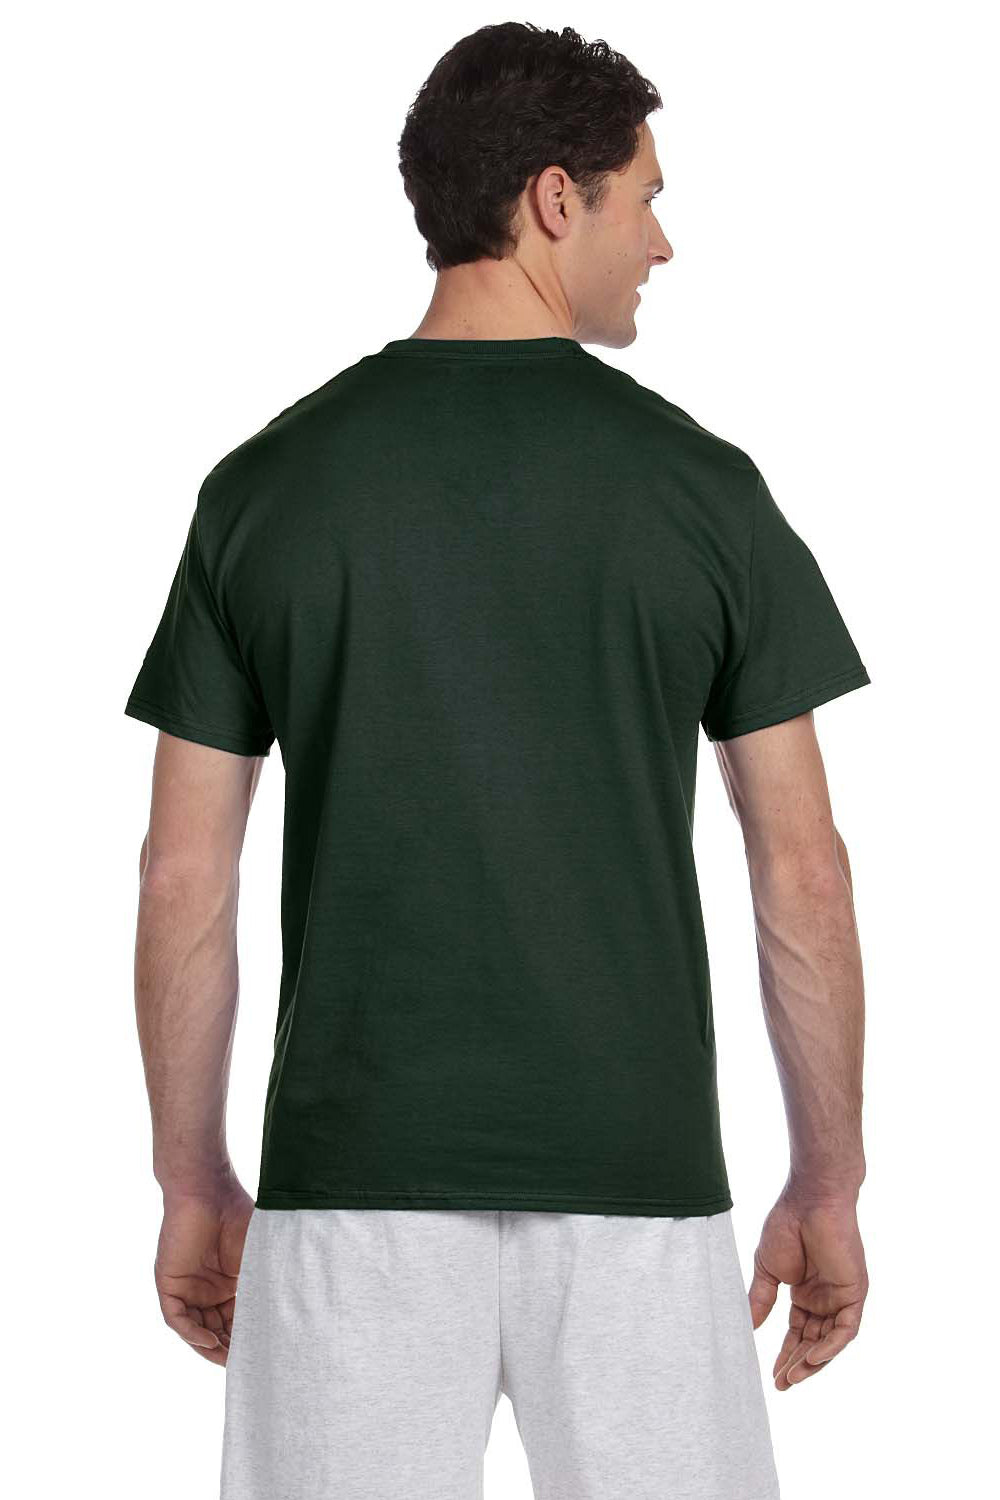 Champion T525C Mens Short Sleeve Crewneck T-Shirt Dark Green Back